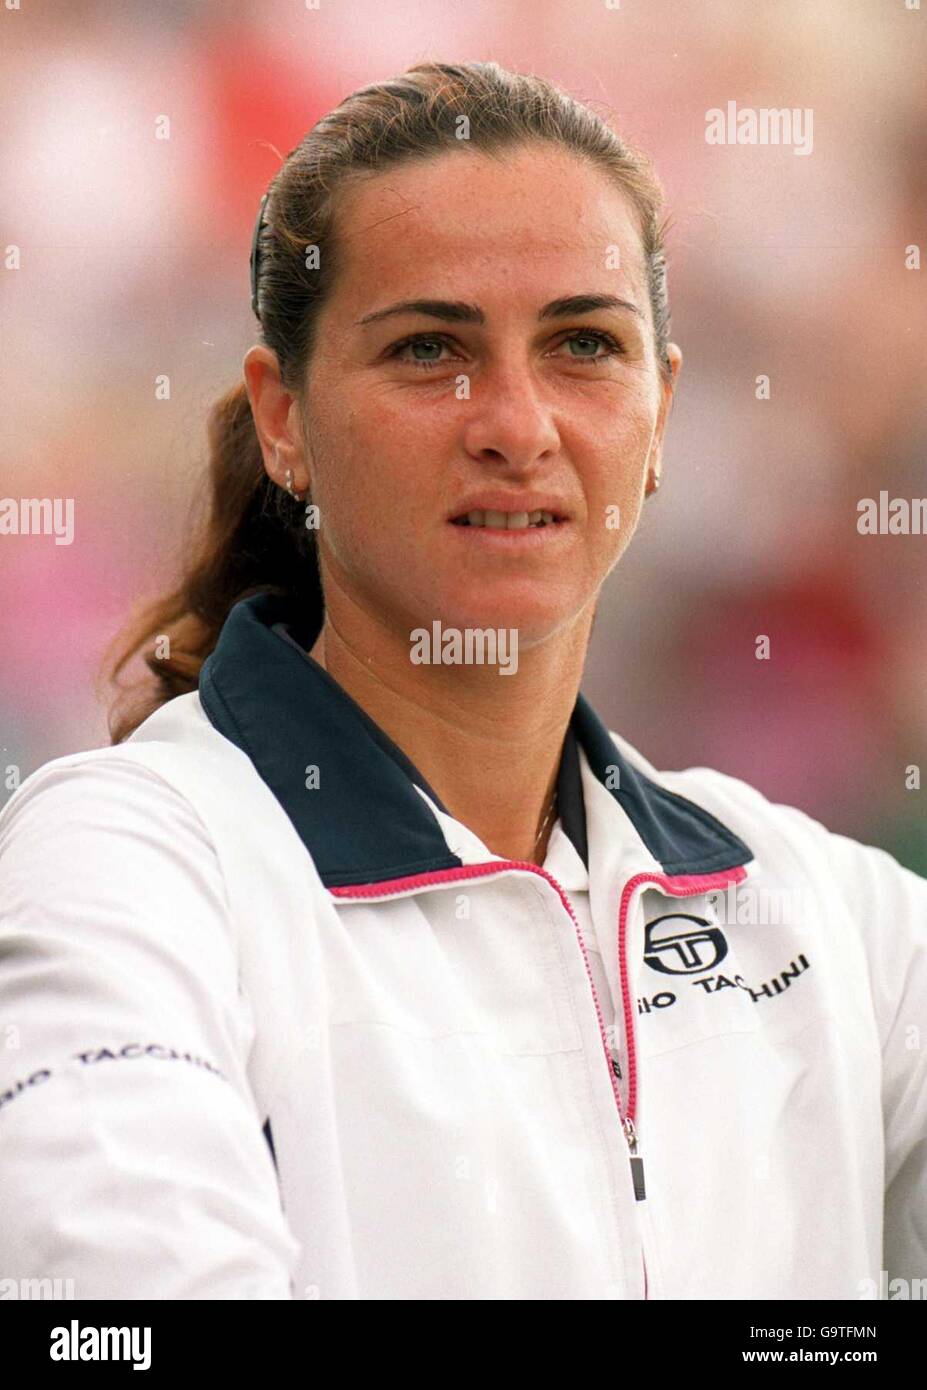 Tennis - Wimbledon 2001 - terzo turno. Silvia farina Elia Foto Stock